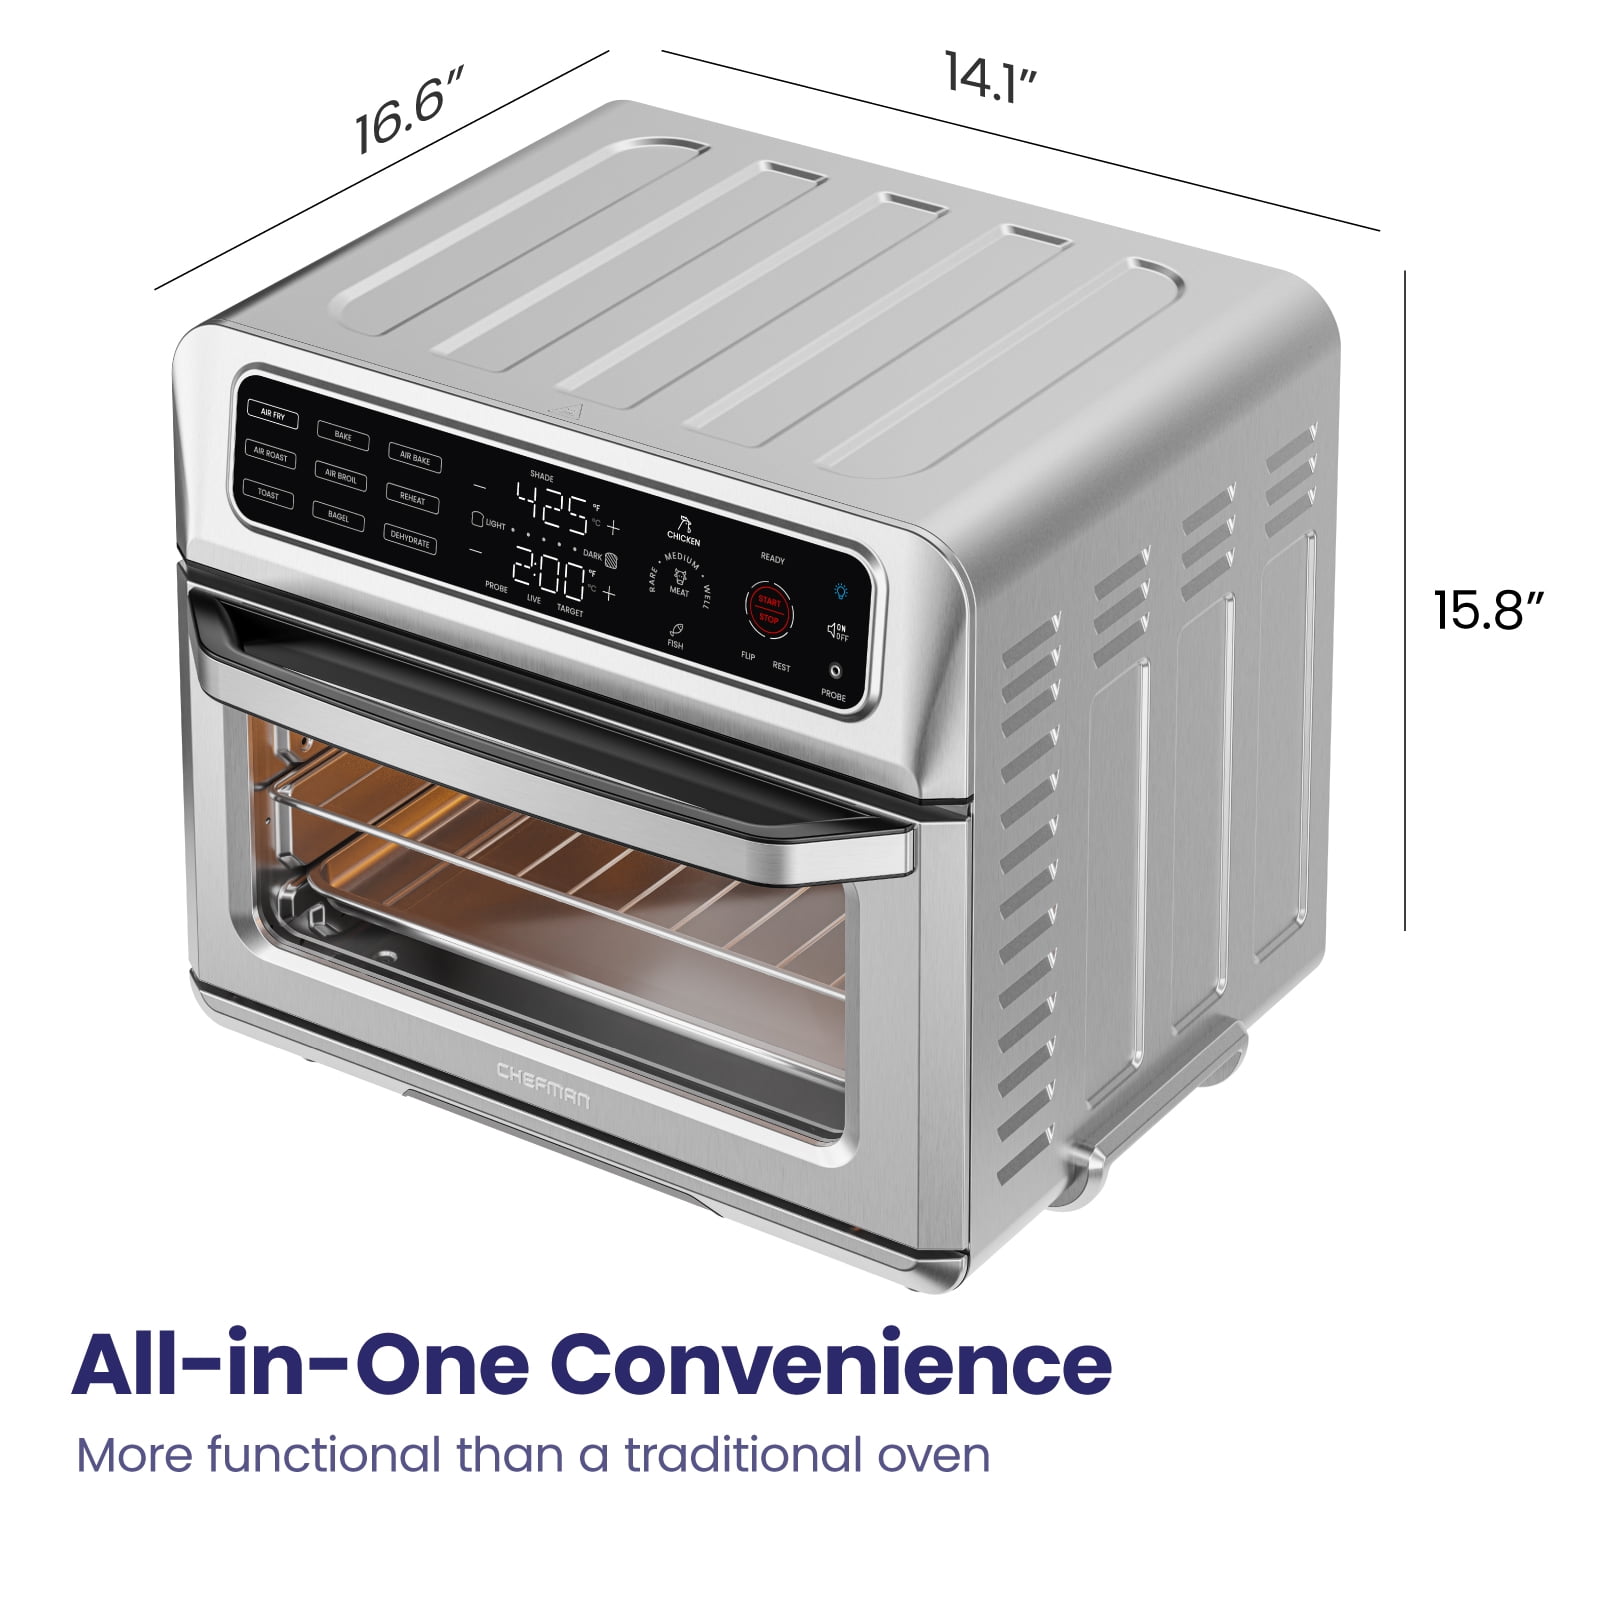 Kenmore elite 1700 watt microwave oven - Appliances - Cameron, Missouri